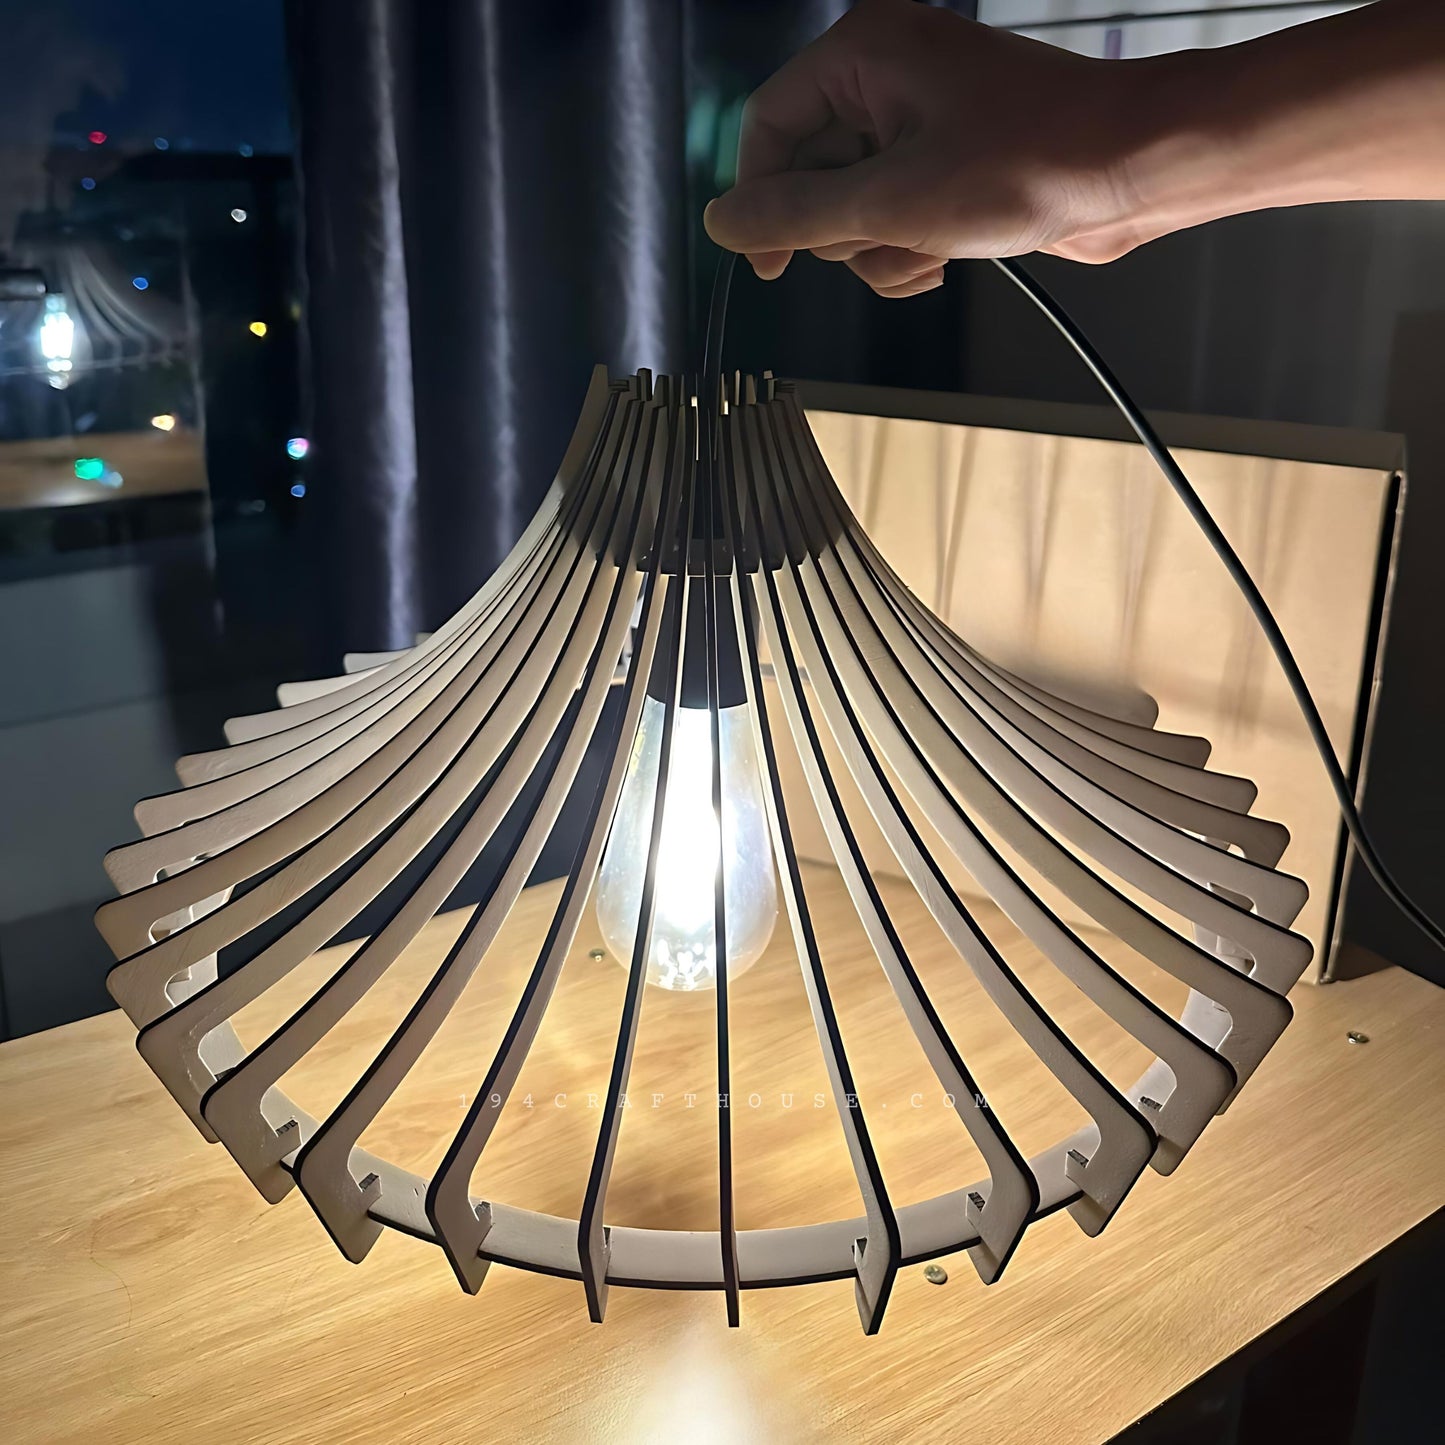 Bela Wood Pendant Light for Dining Room, Bird Nest Hanging Lamp